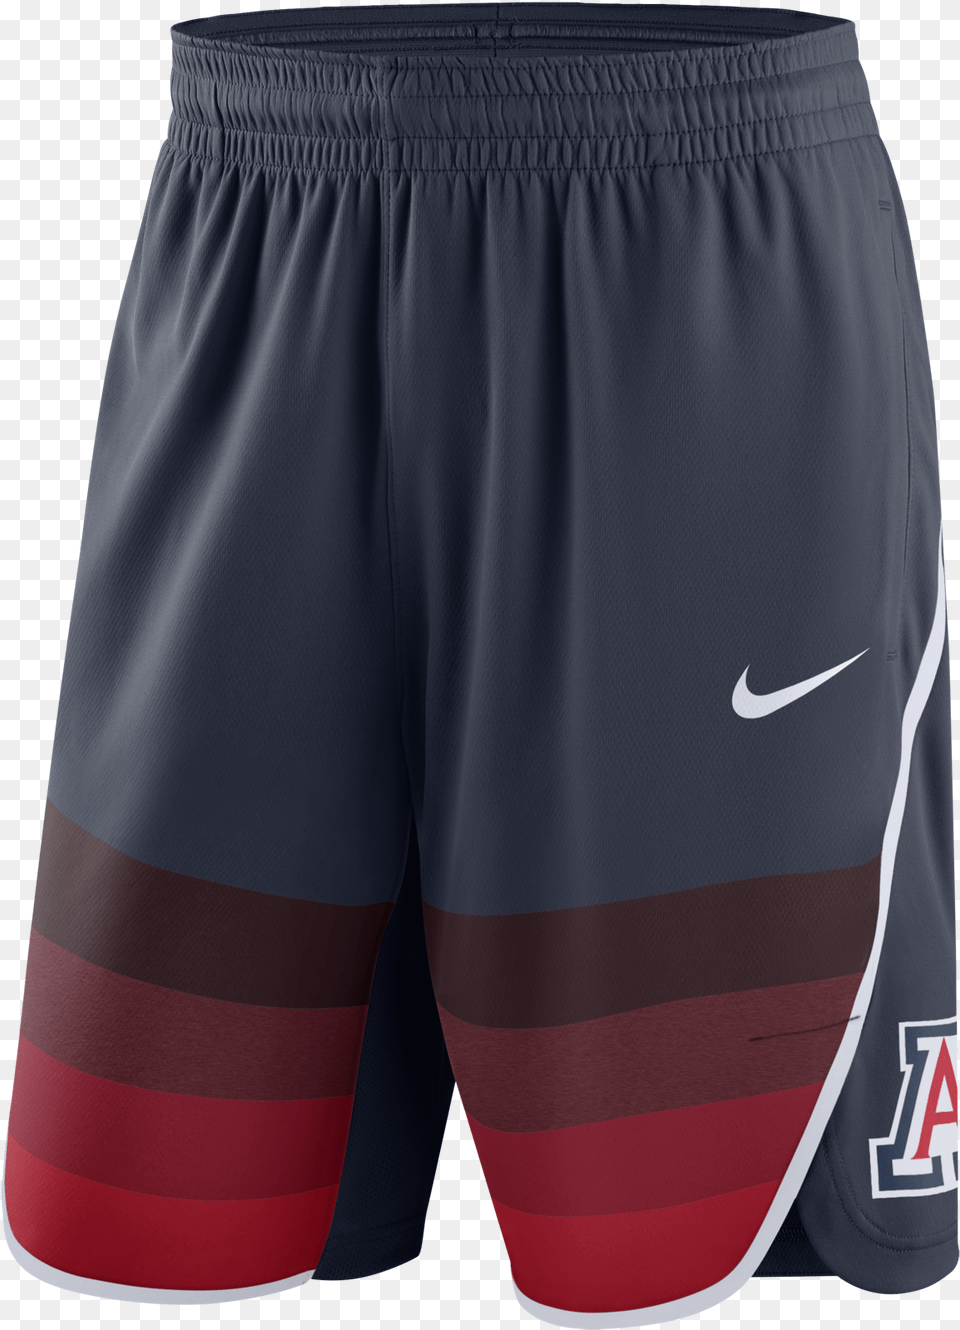 Arizona Wildcats University Of Arizona, Clothing, Shorts, Swimming Trunks, Person Free Transparent Png